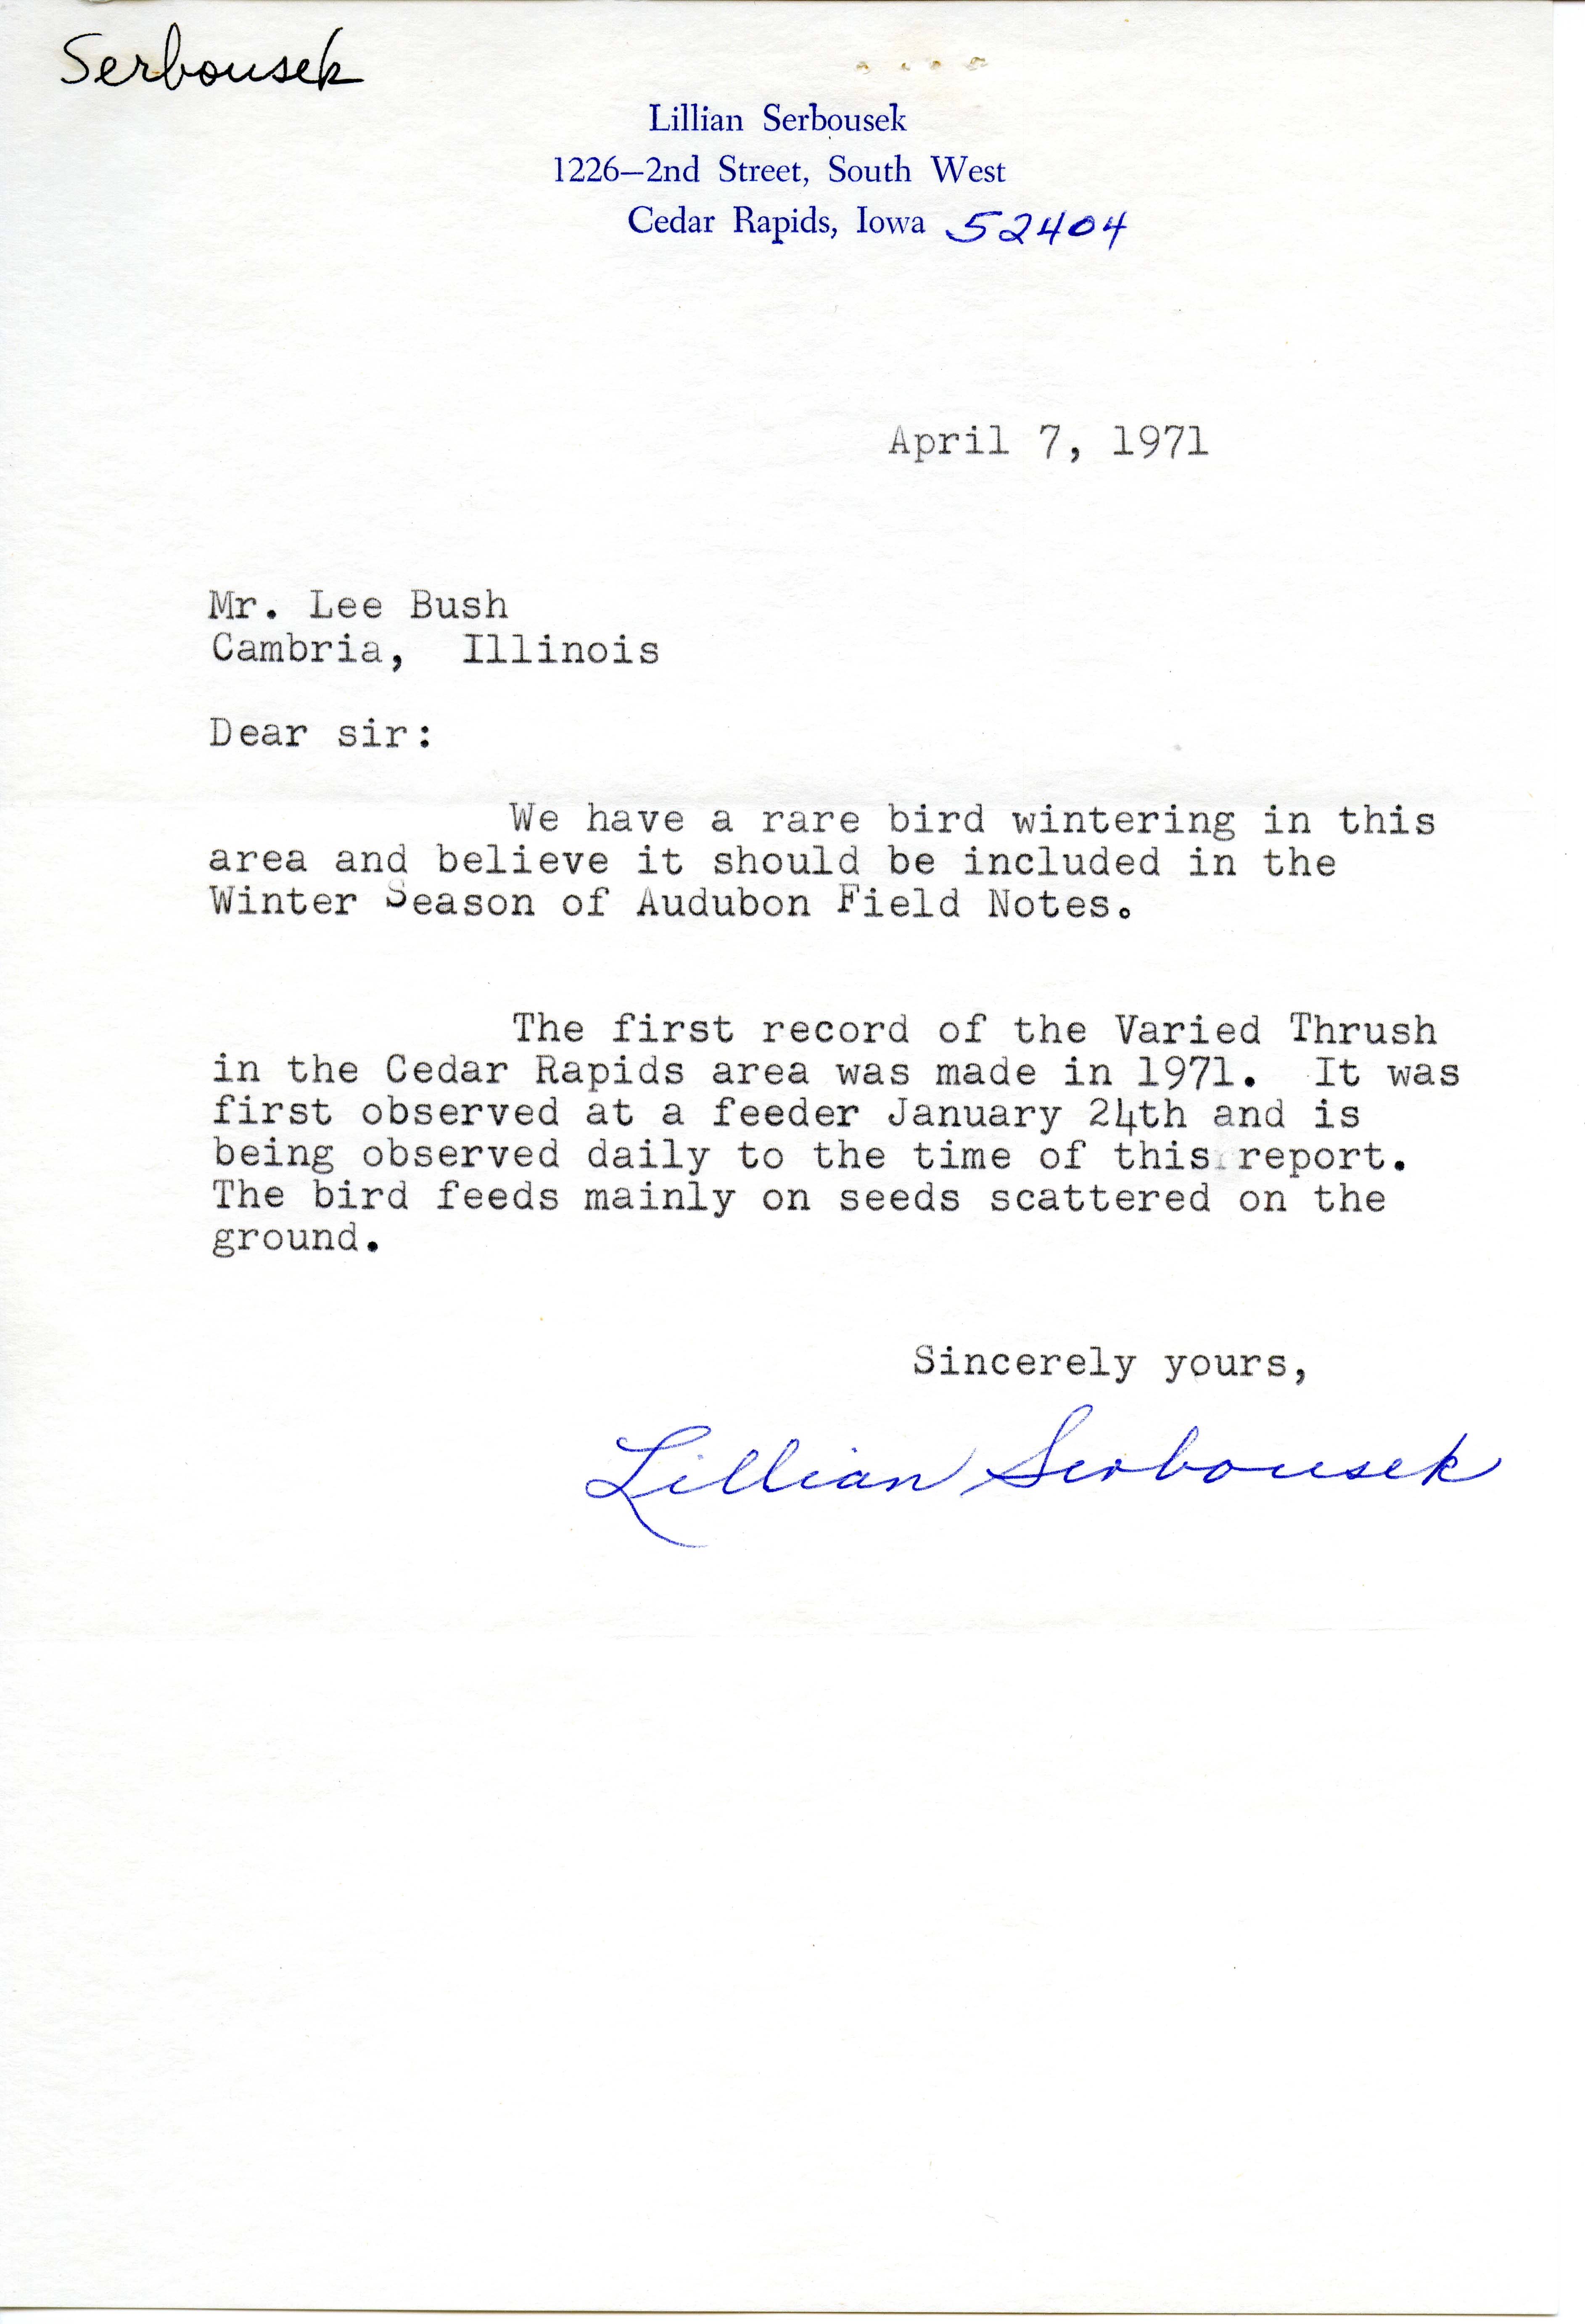 Lillian Serbousek letter to Lee Bush, regarding a Varied Thrush wintering in Cedar Rapids area in 1971, April 7, 1971